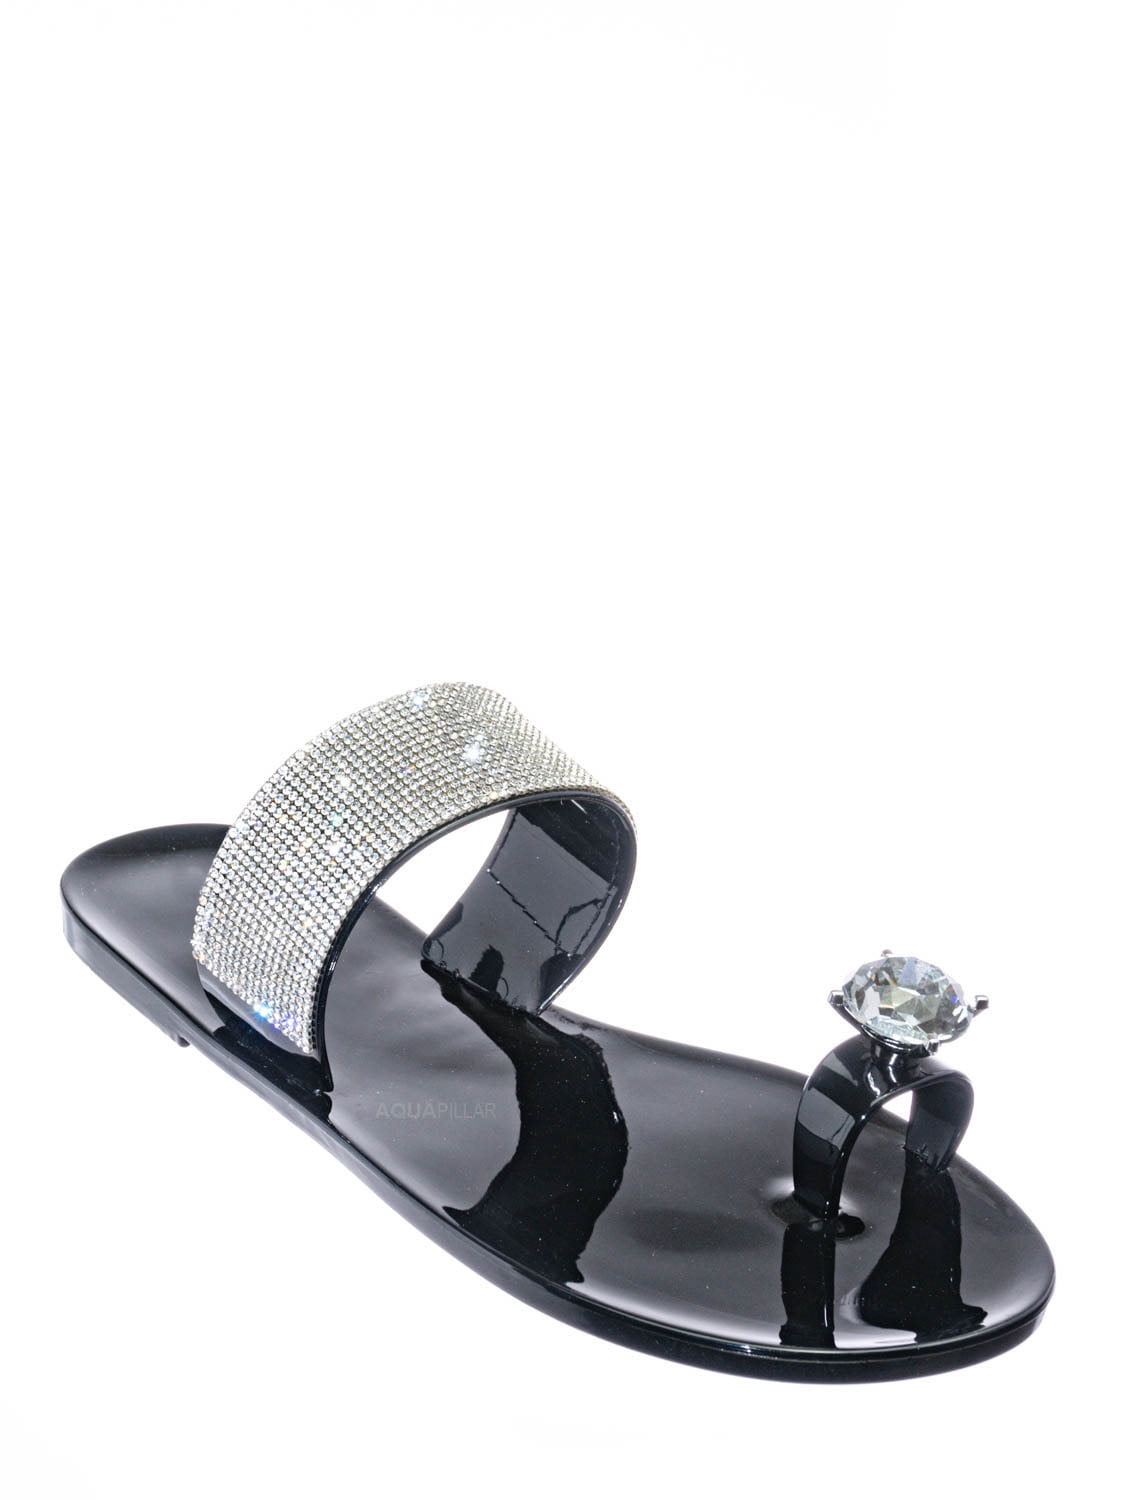 Urban Heel Women's Rhinestone Jeweled Holo Clear Strap Toe Ring Sandal Slides